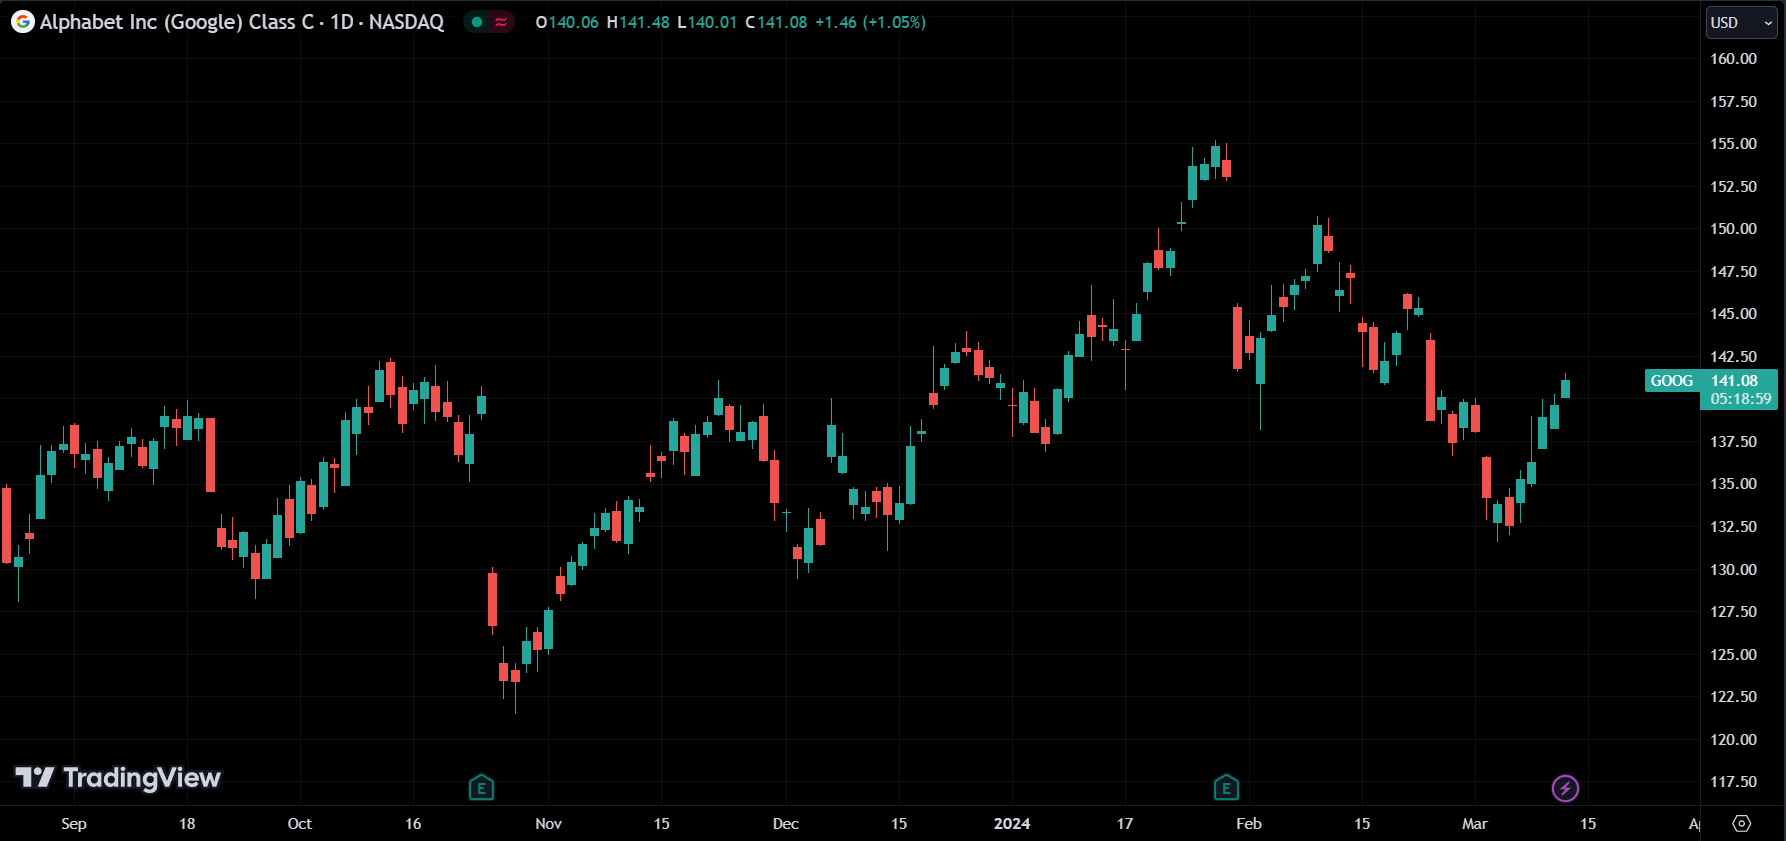 goog stock price chart
xlearnonline.com